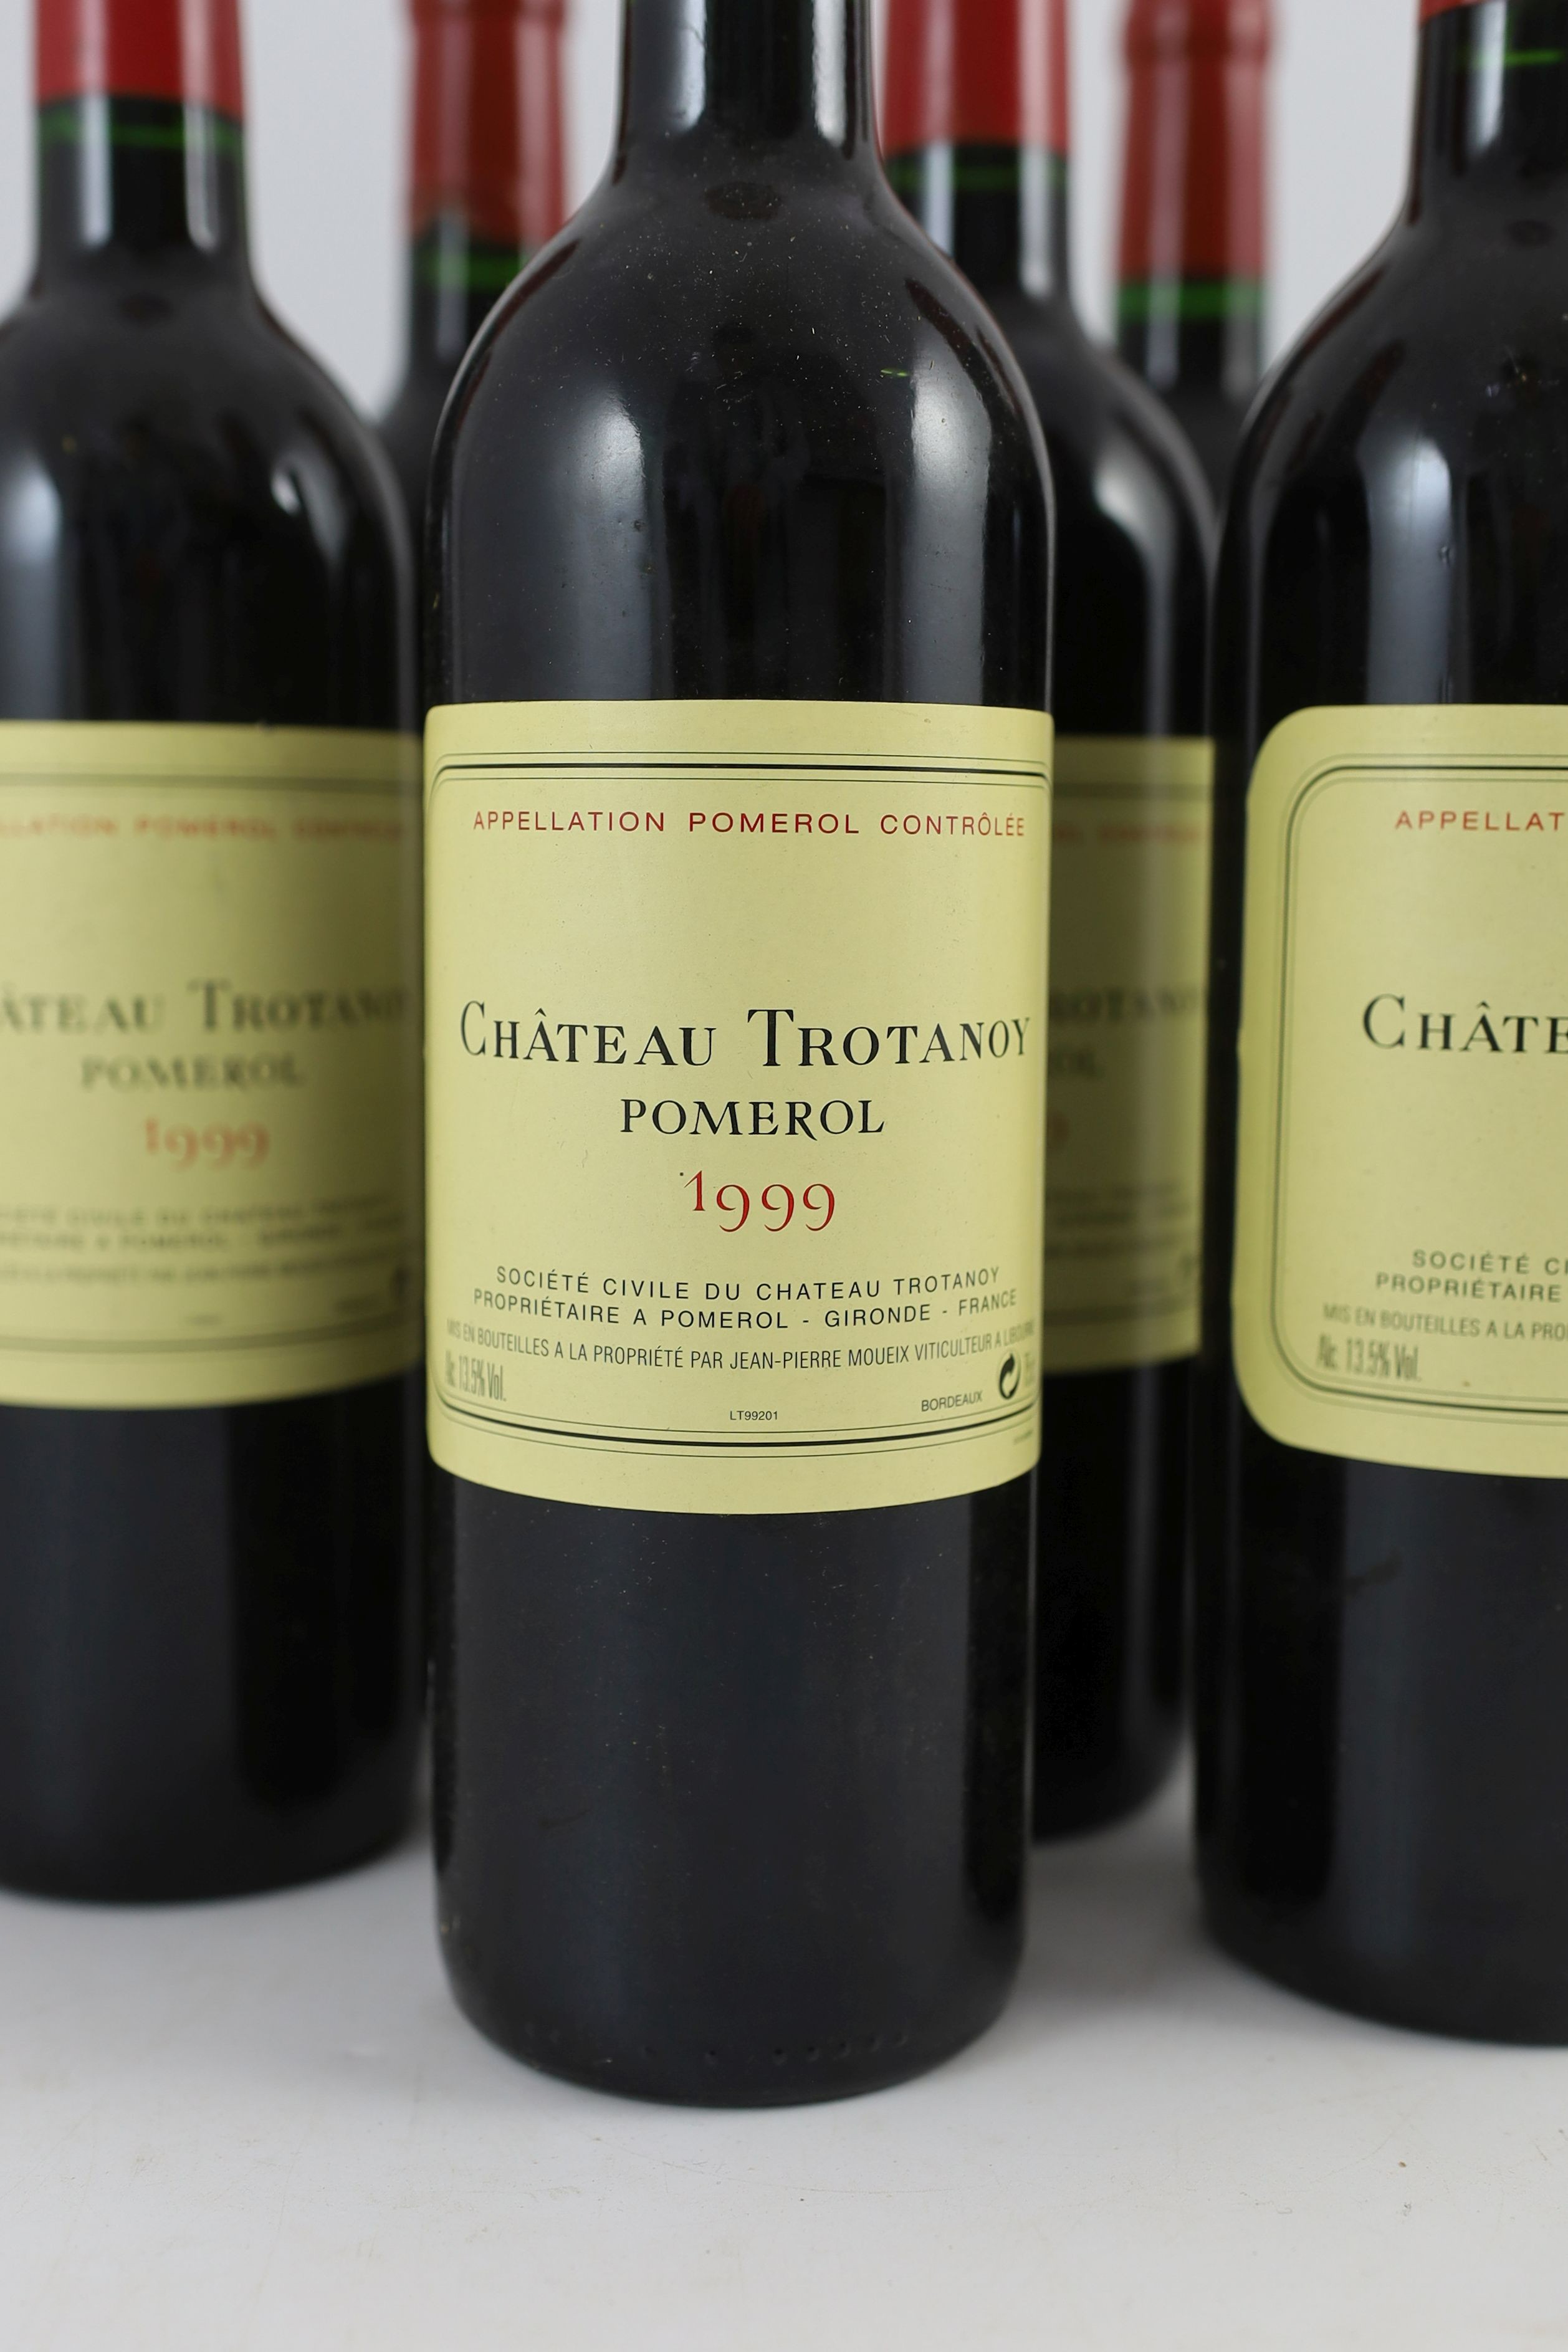 Nine bottles of Chateau Trotanoy Pomerol 1999, height 30cm